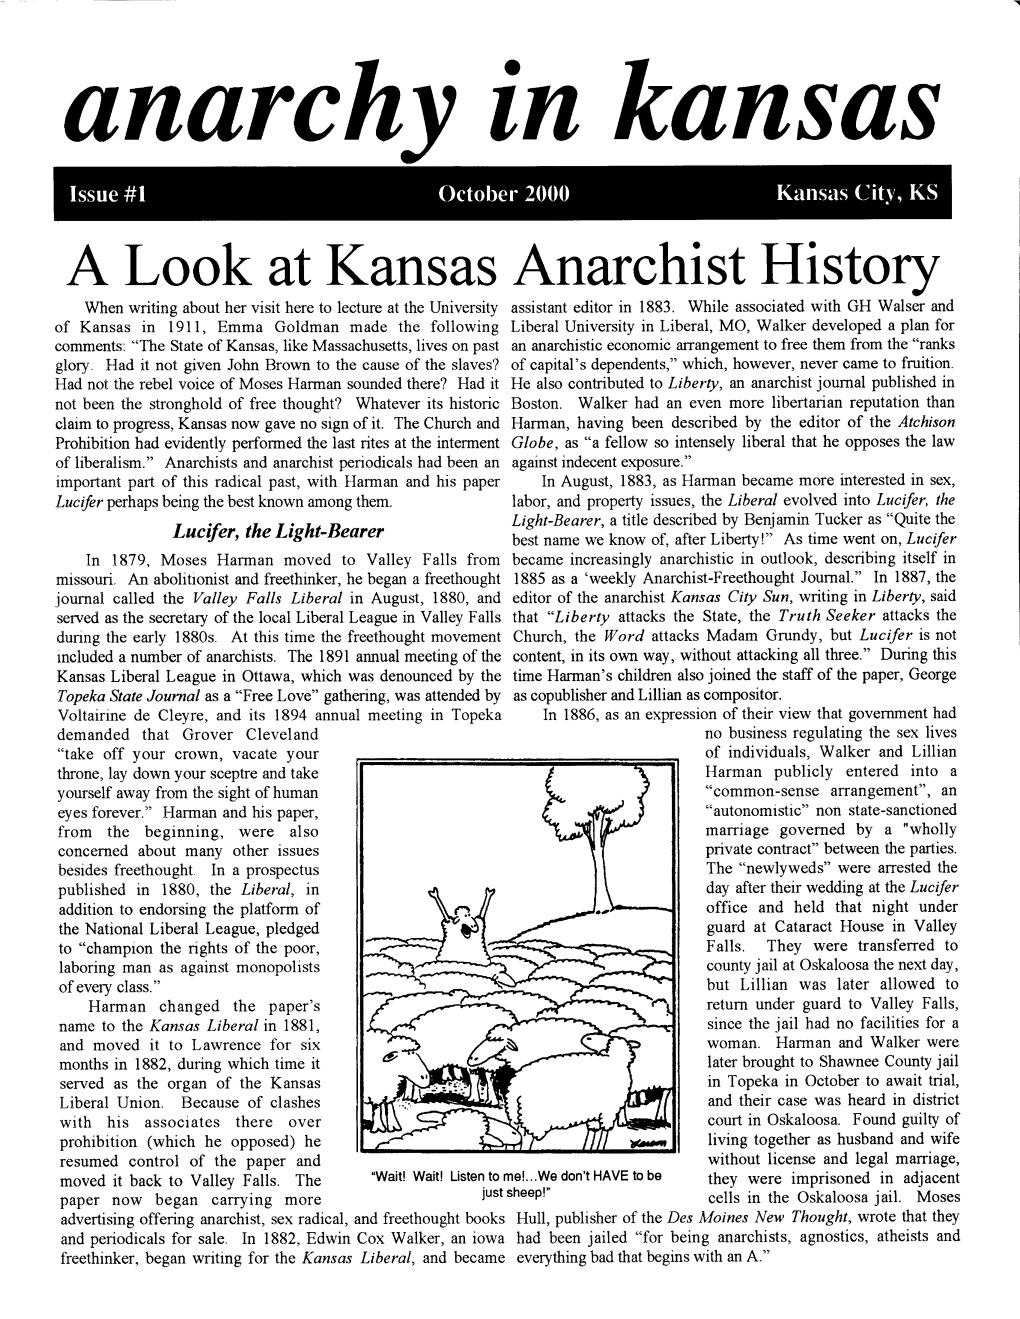 A Look at Kansas Anarchist History